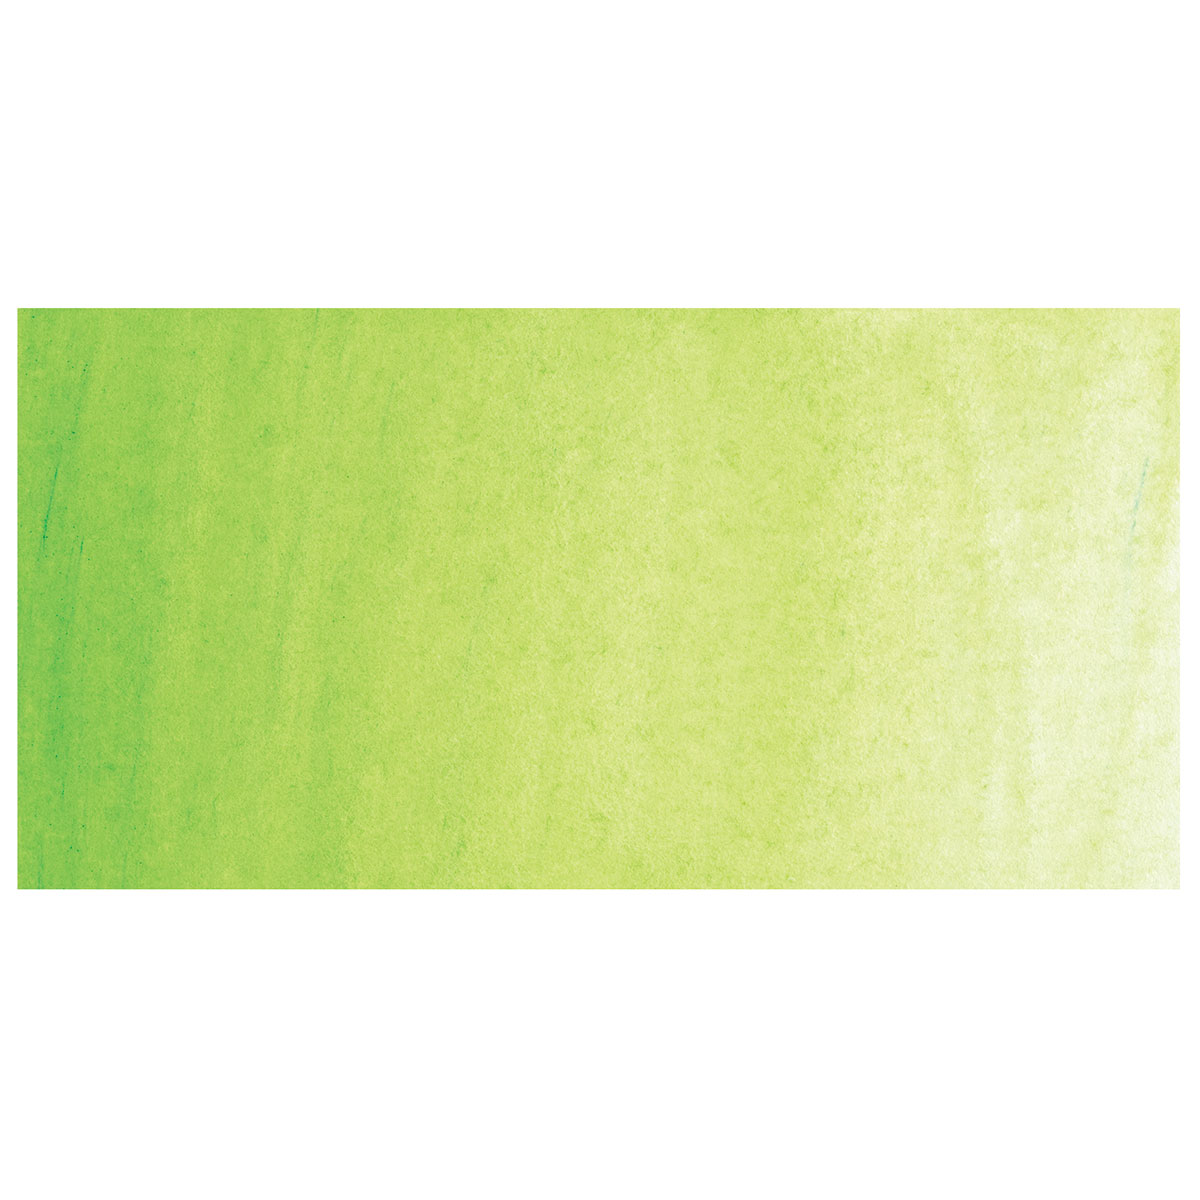 Sakura Koi Watercolor - Yellow Green, 12 mL, Tube